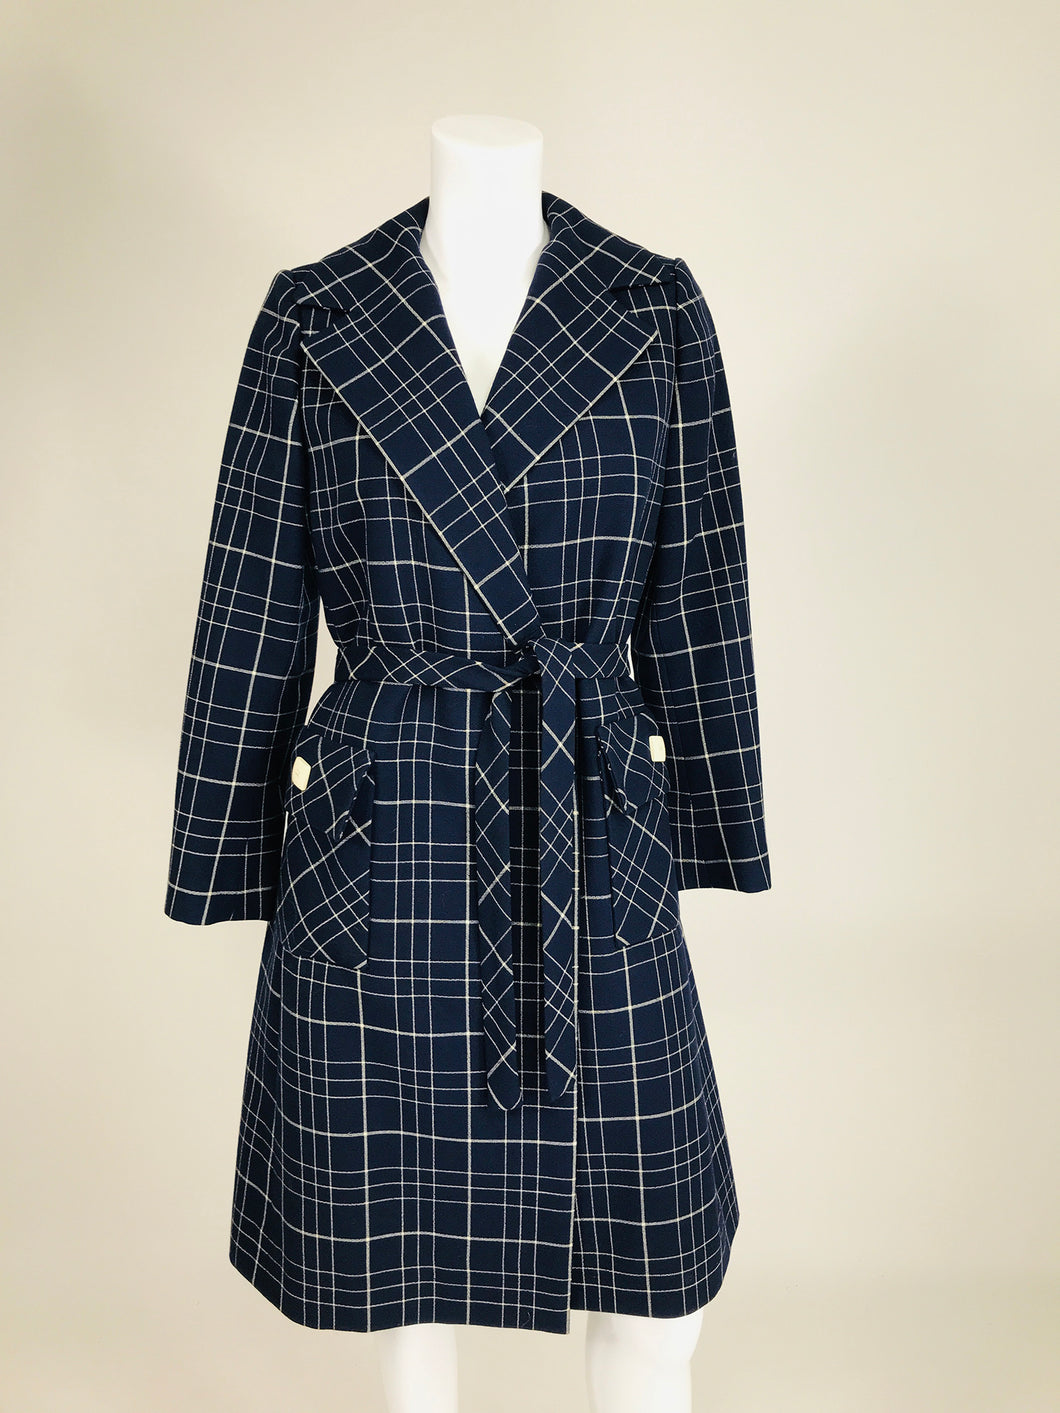 Adele Simpson 1960s Navy & White Wool Plaid  Wrap Coat